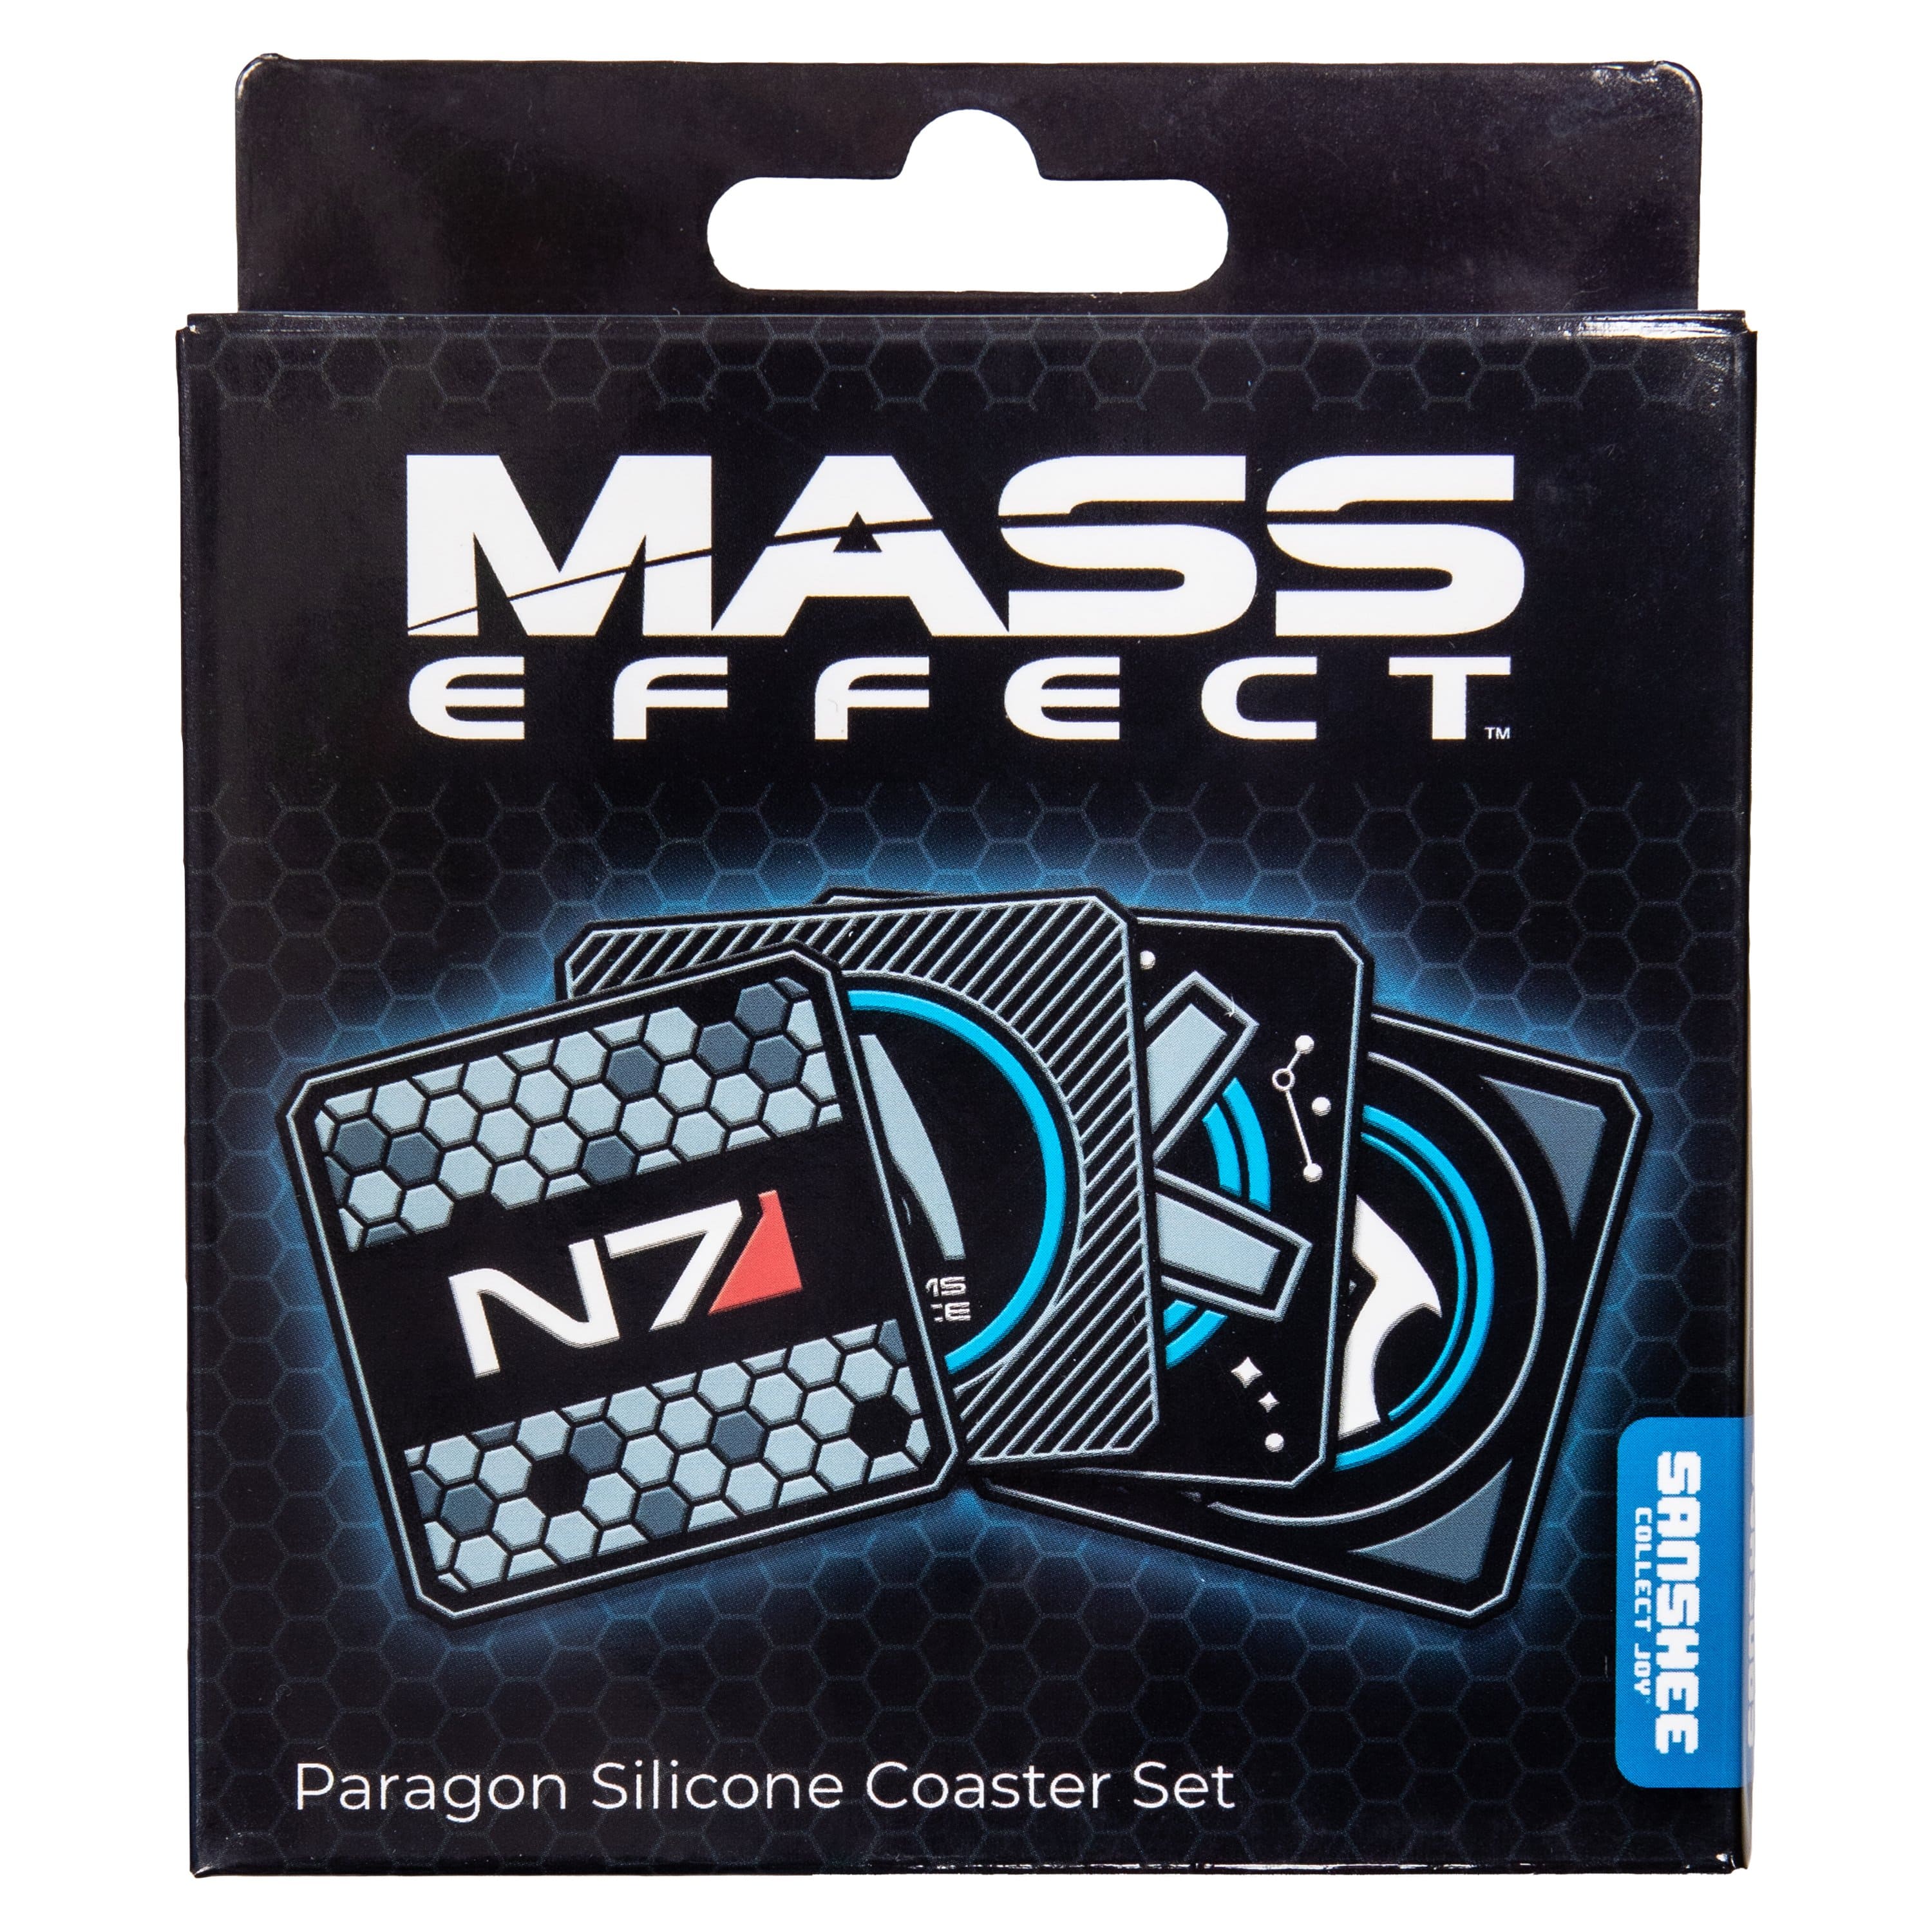 Mass Effect - Paragon Silicone Coaster Set